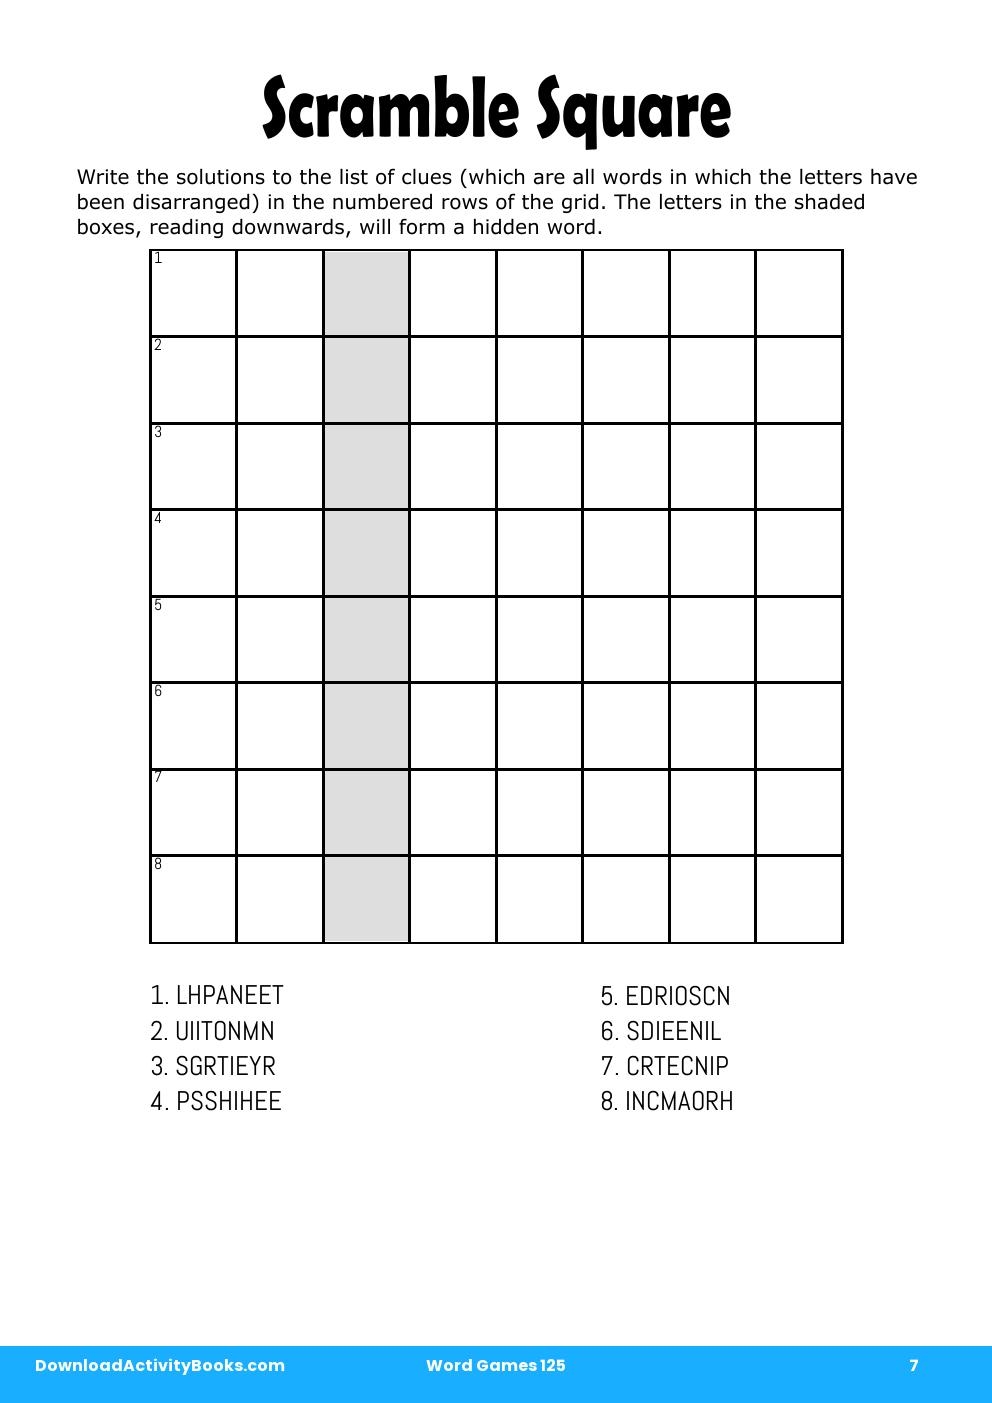 Scramble Square in Word Games 125